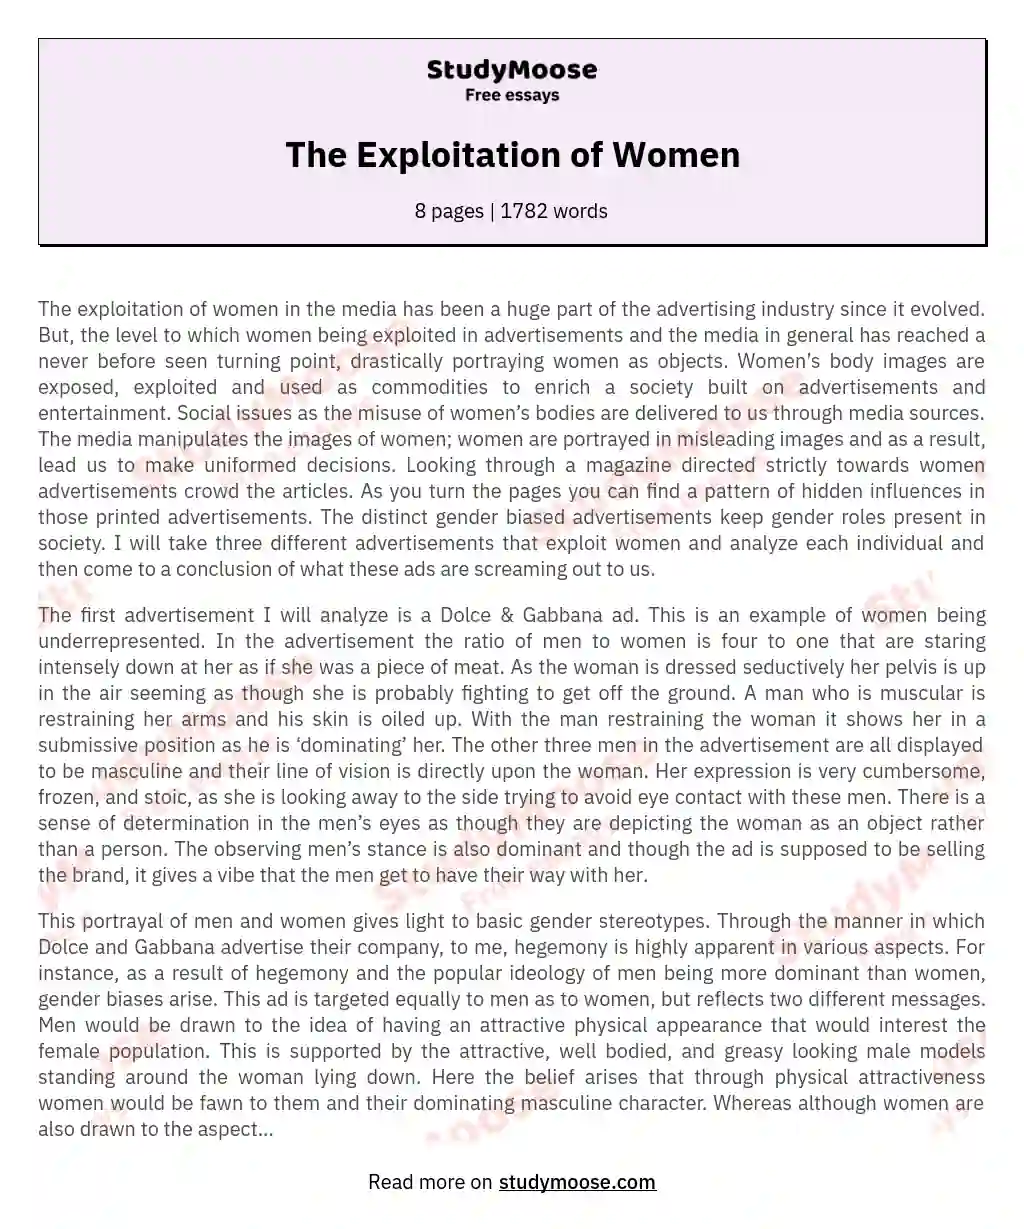 The Exploitation of Women essay